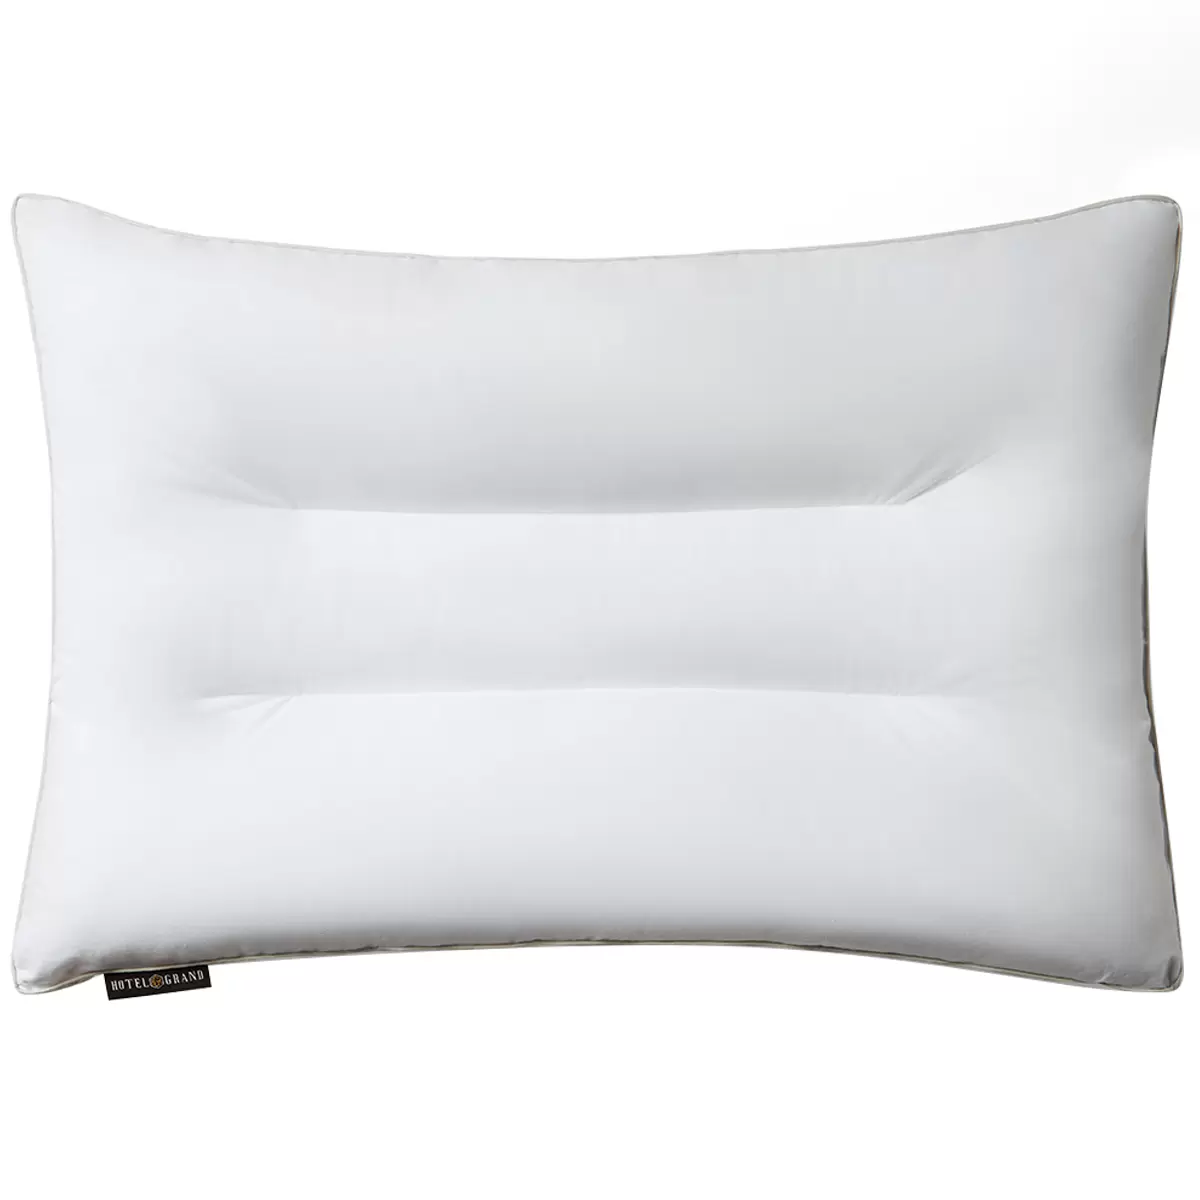 Hotel Grand Custom Support Pillow Medium